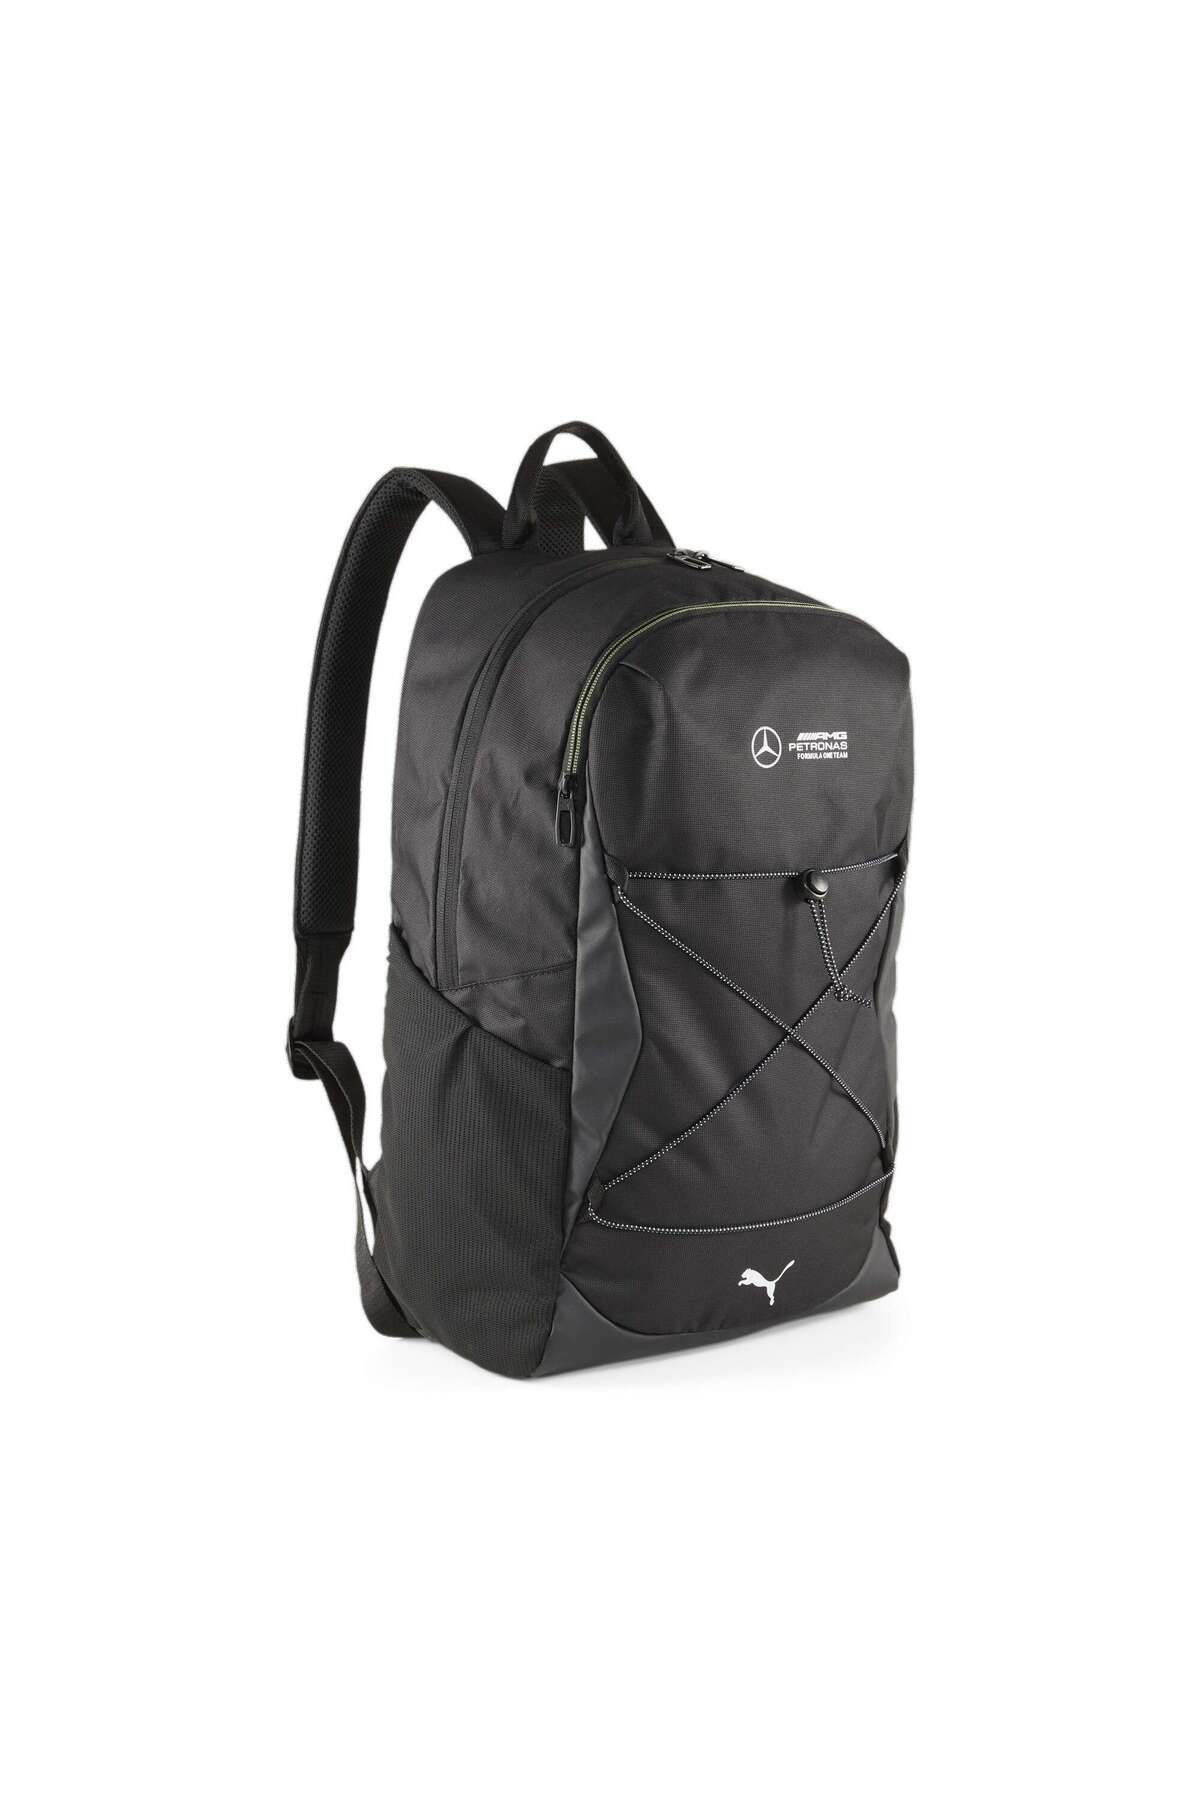 Puma MAPF1 Backpack